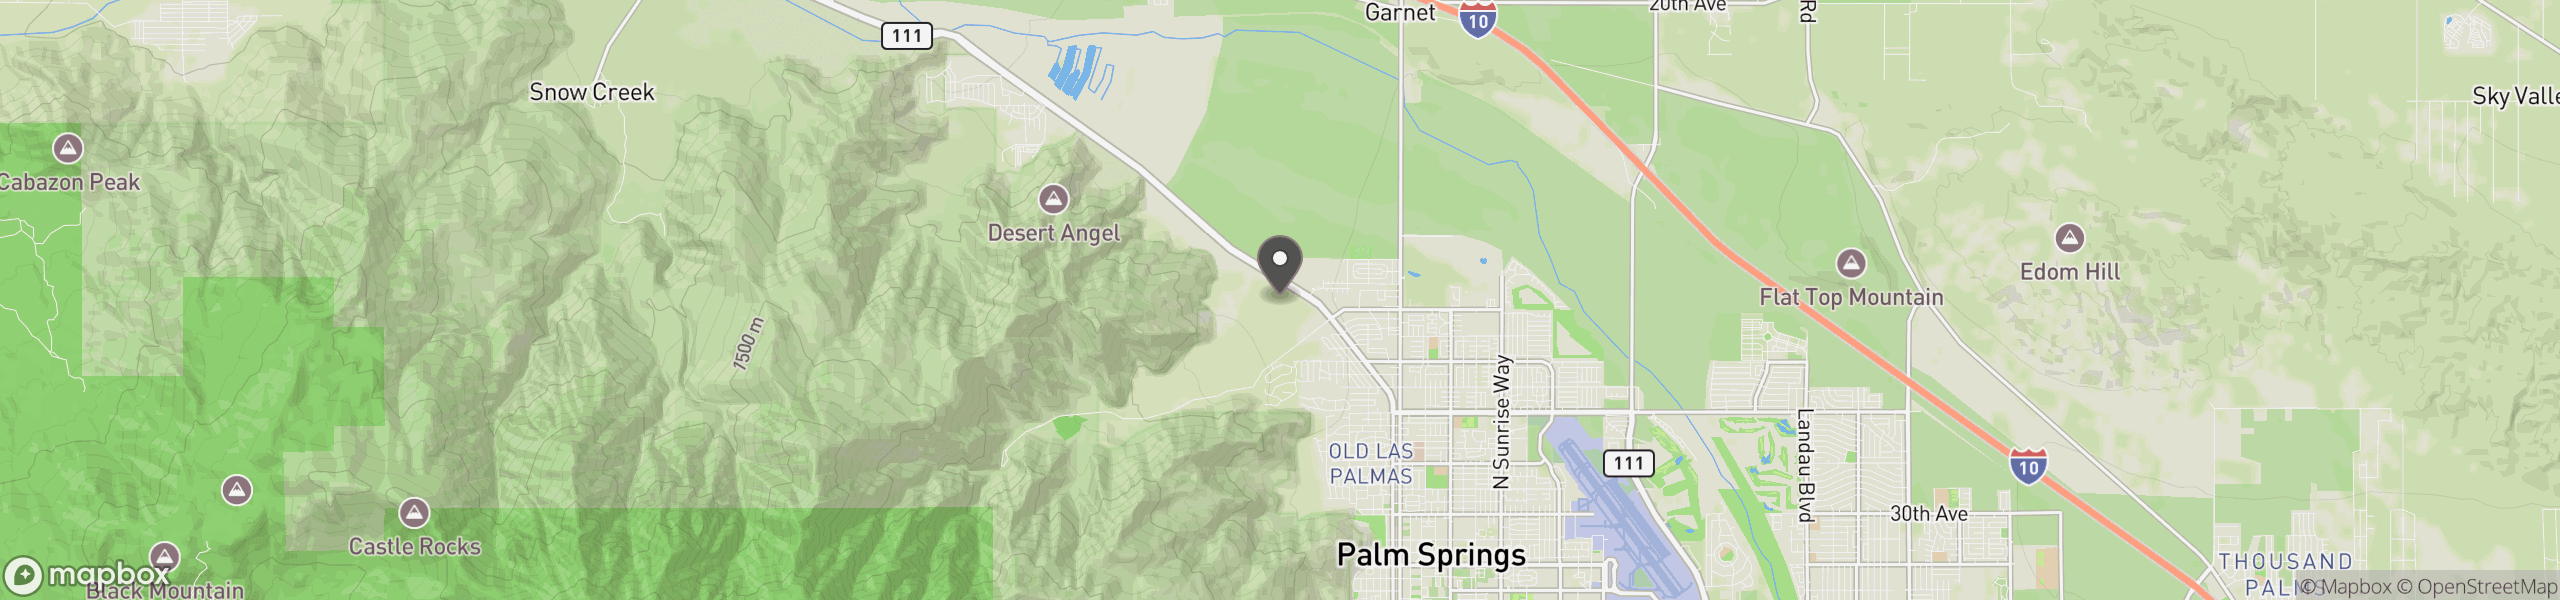 Palm Springs, CA 92262